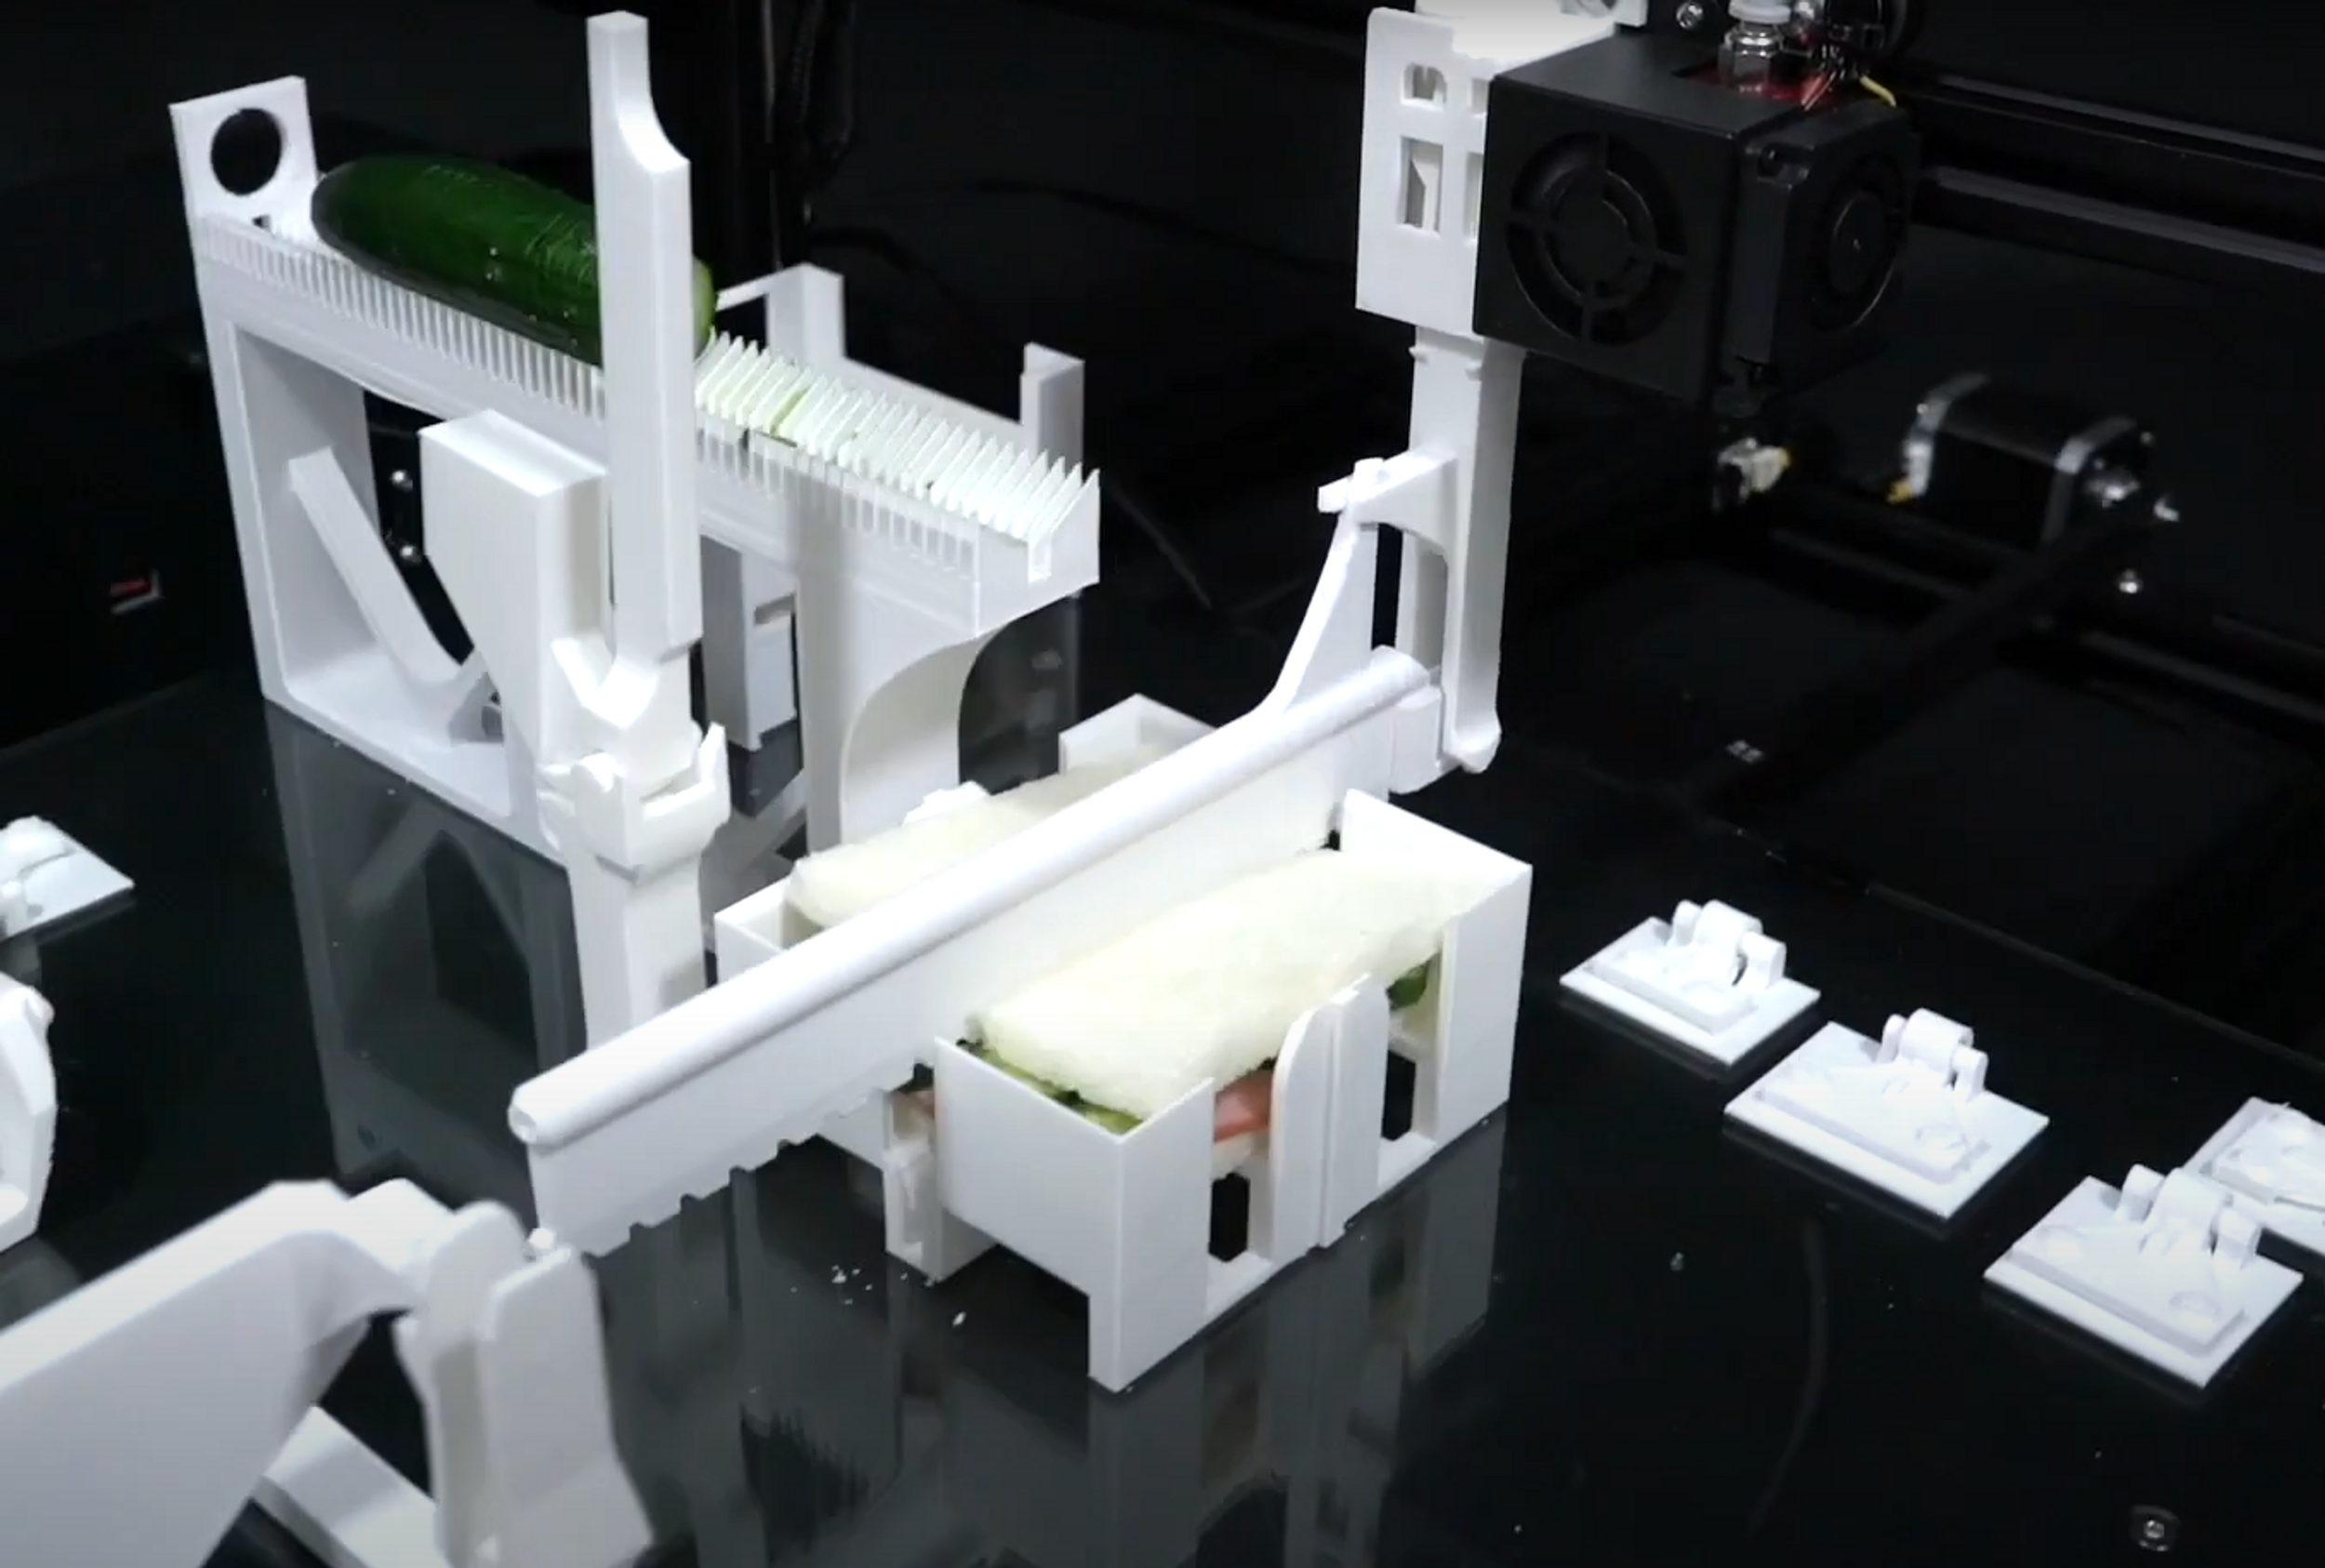 A 3D printer makes a sandwich